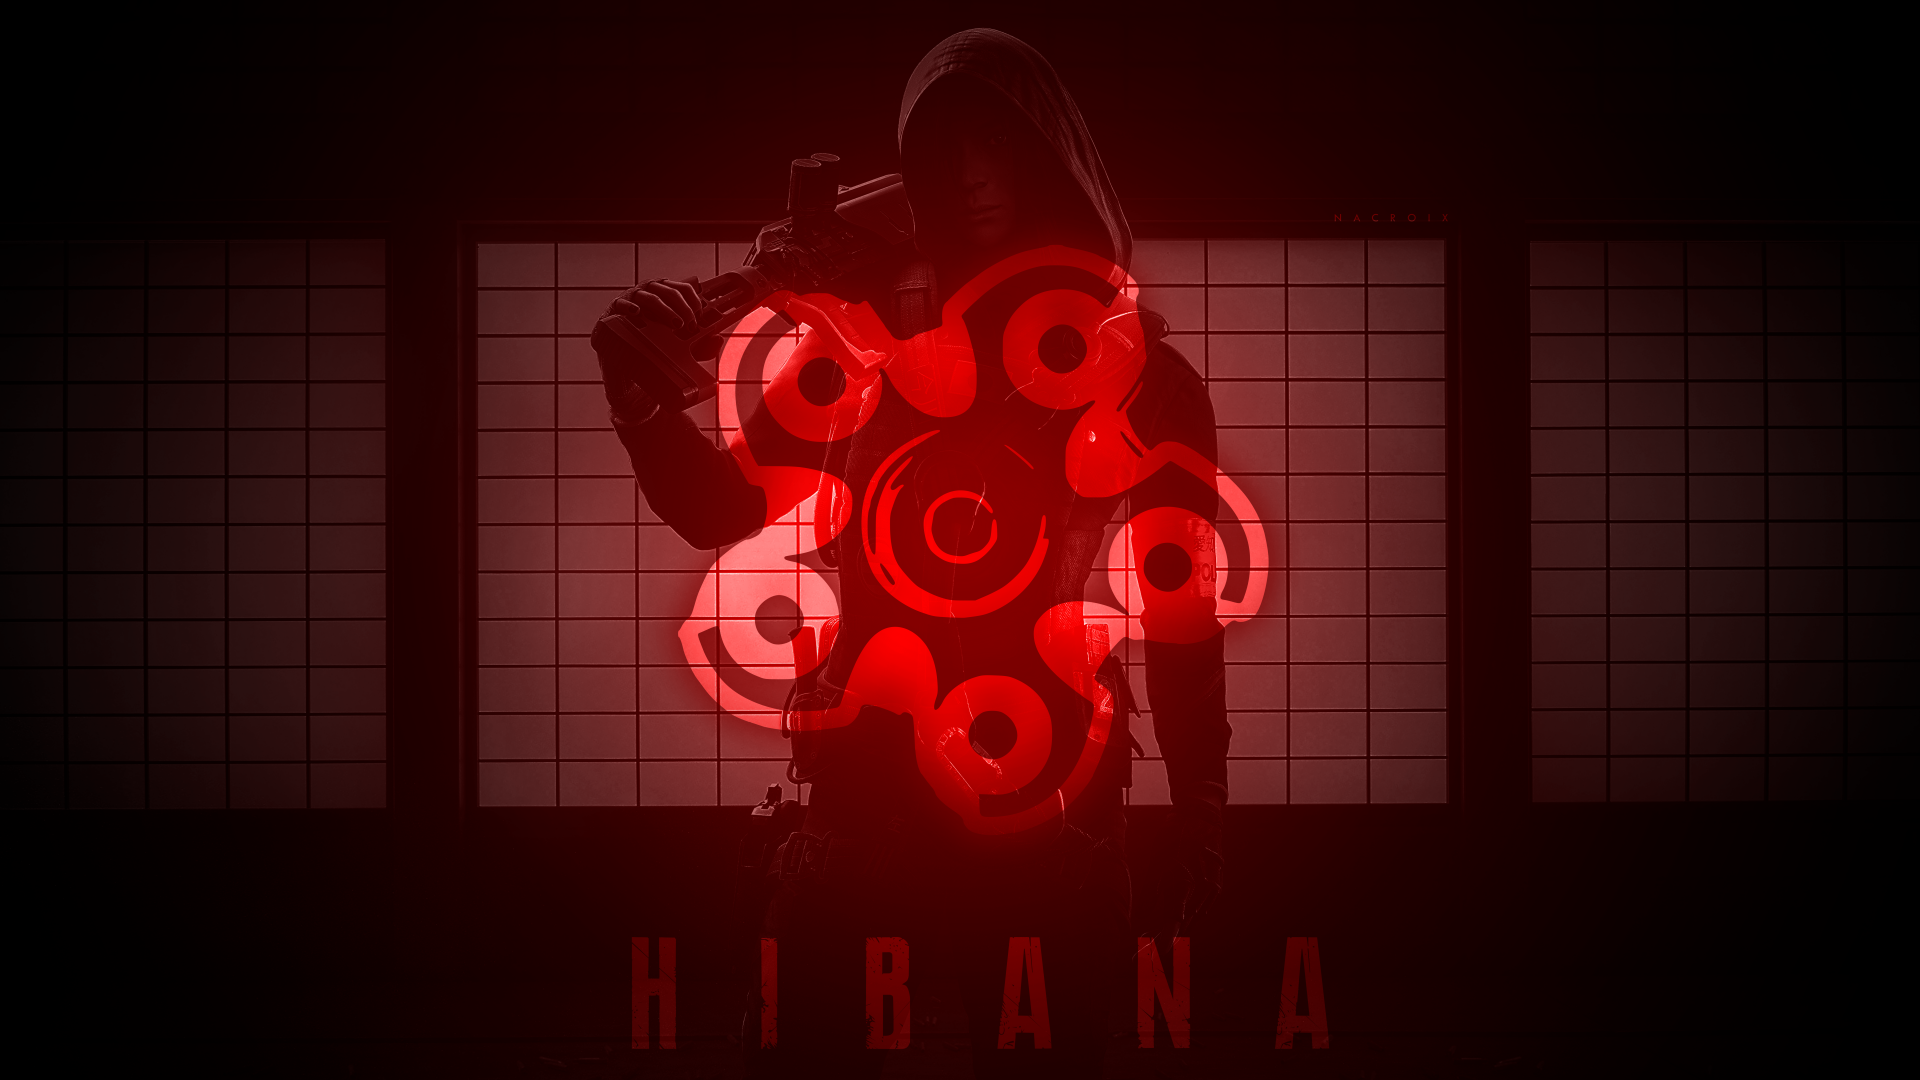 12000x6750 Hibana by Cyrax Wallpaper Background Image. 